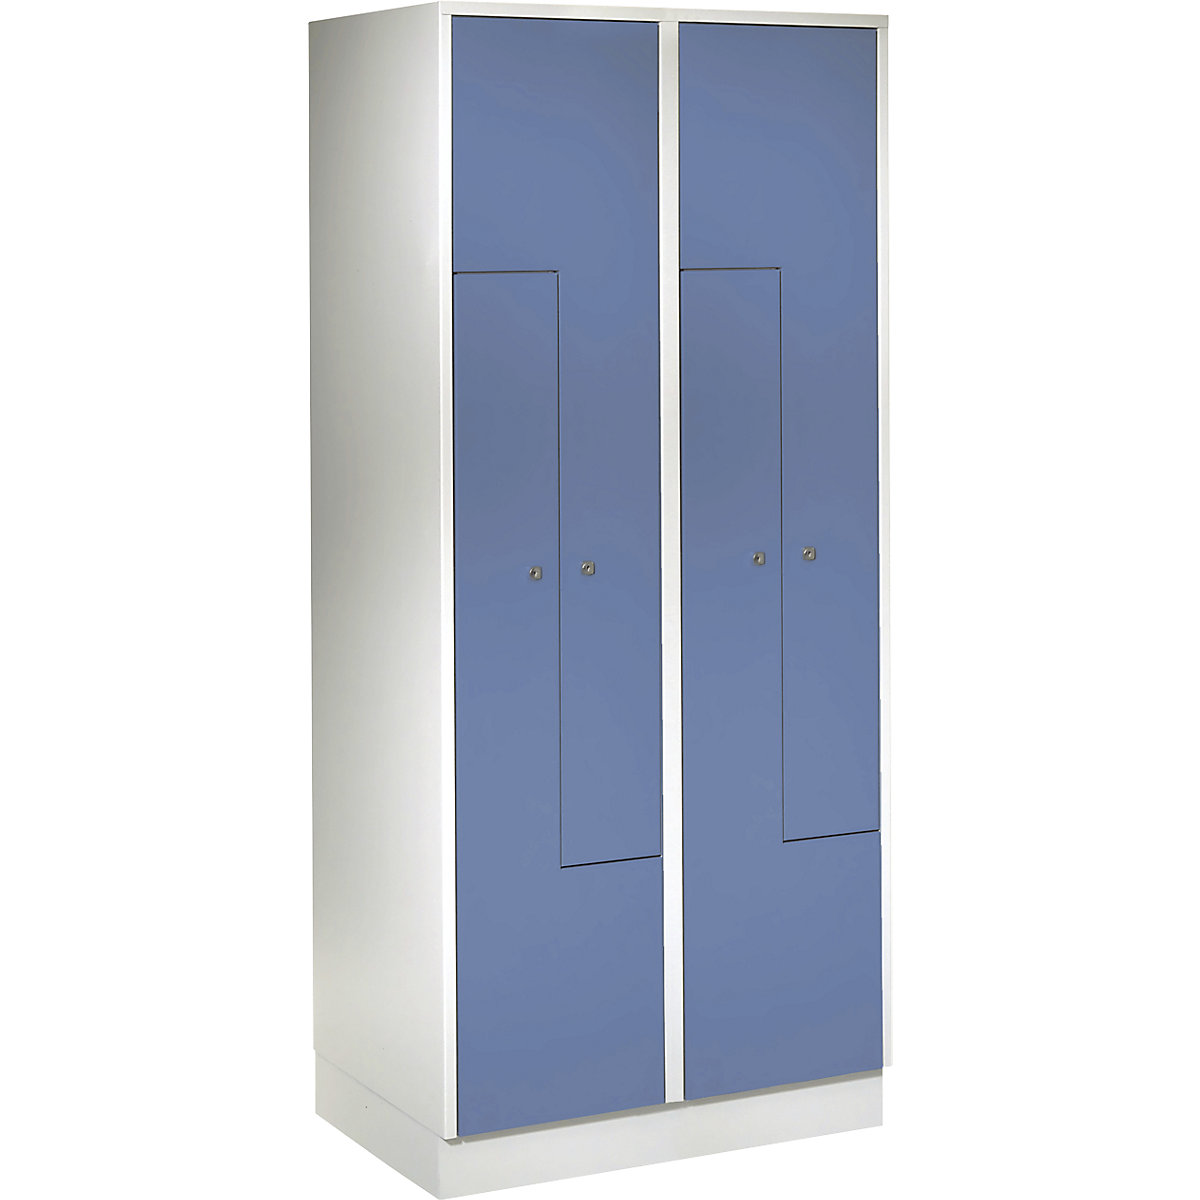 Z cloakroom locker – Wolf, 4 compartments, pigeon blue doors-13